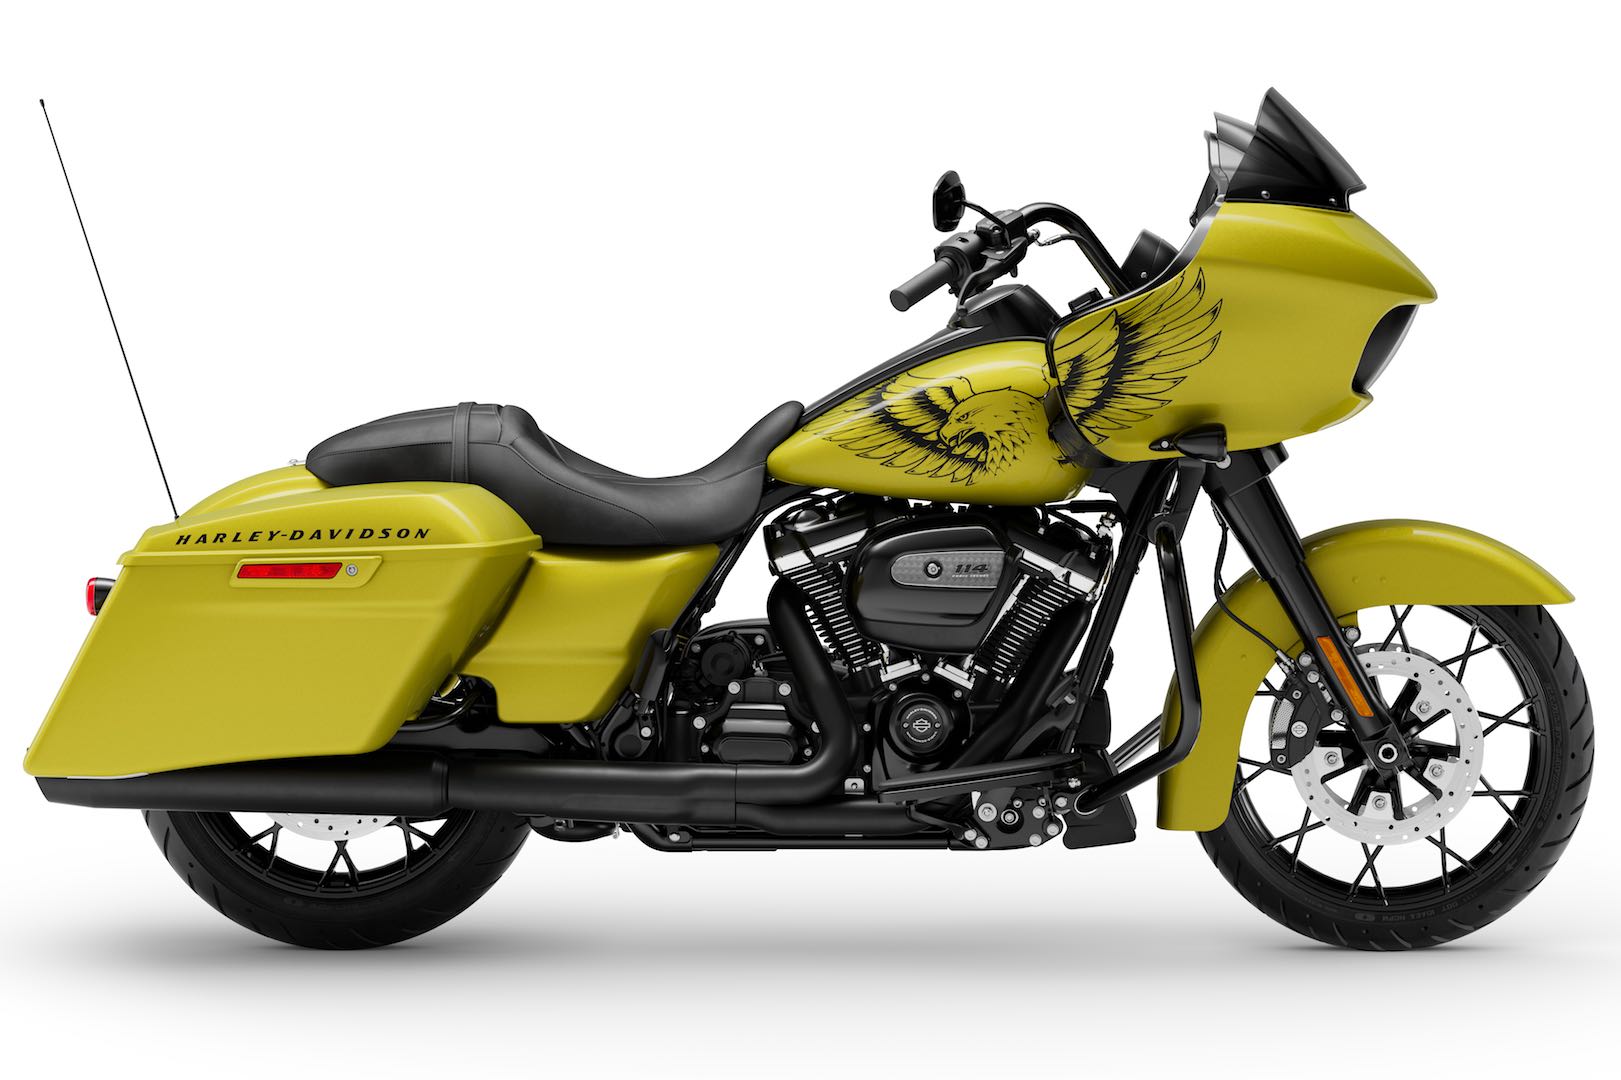 2020 Harley Davidson Road Glide Special Eagle Eye Yellow Uae Dubai 2 Bnm